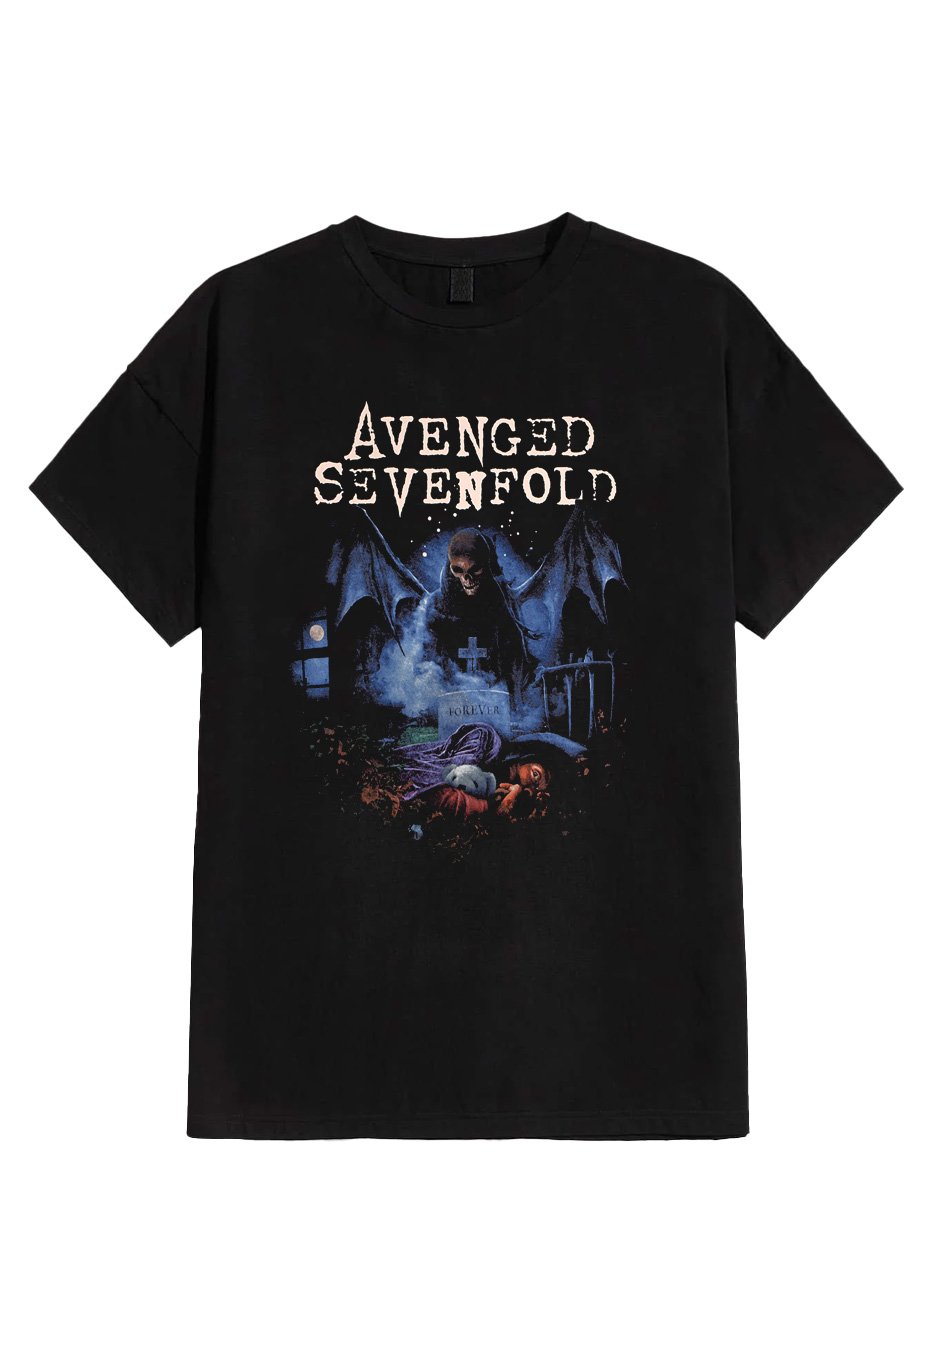 Avenged Sevenfold - Recurring Nightmare - T-Shirt